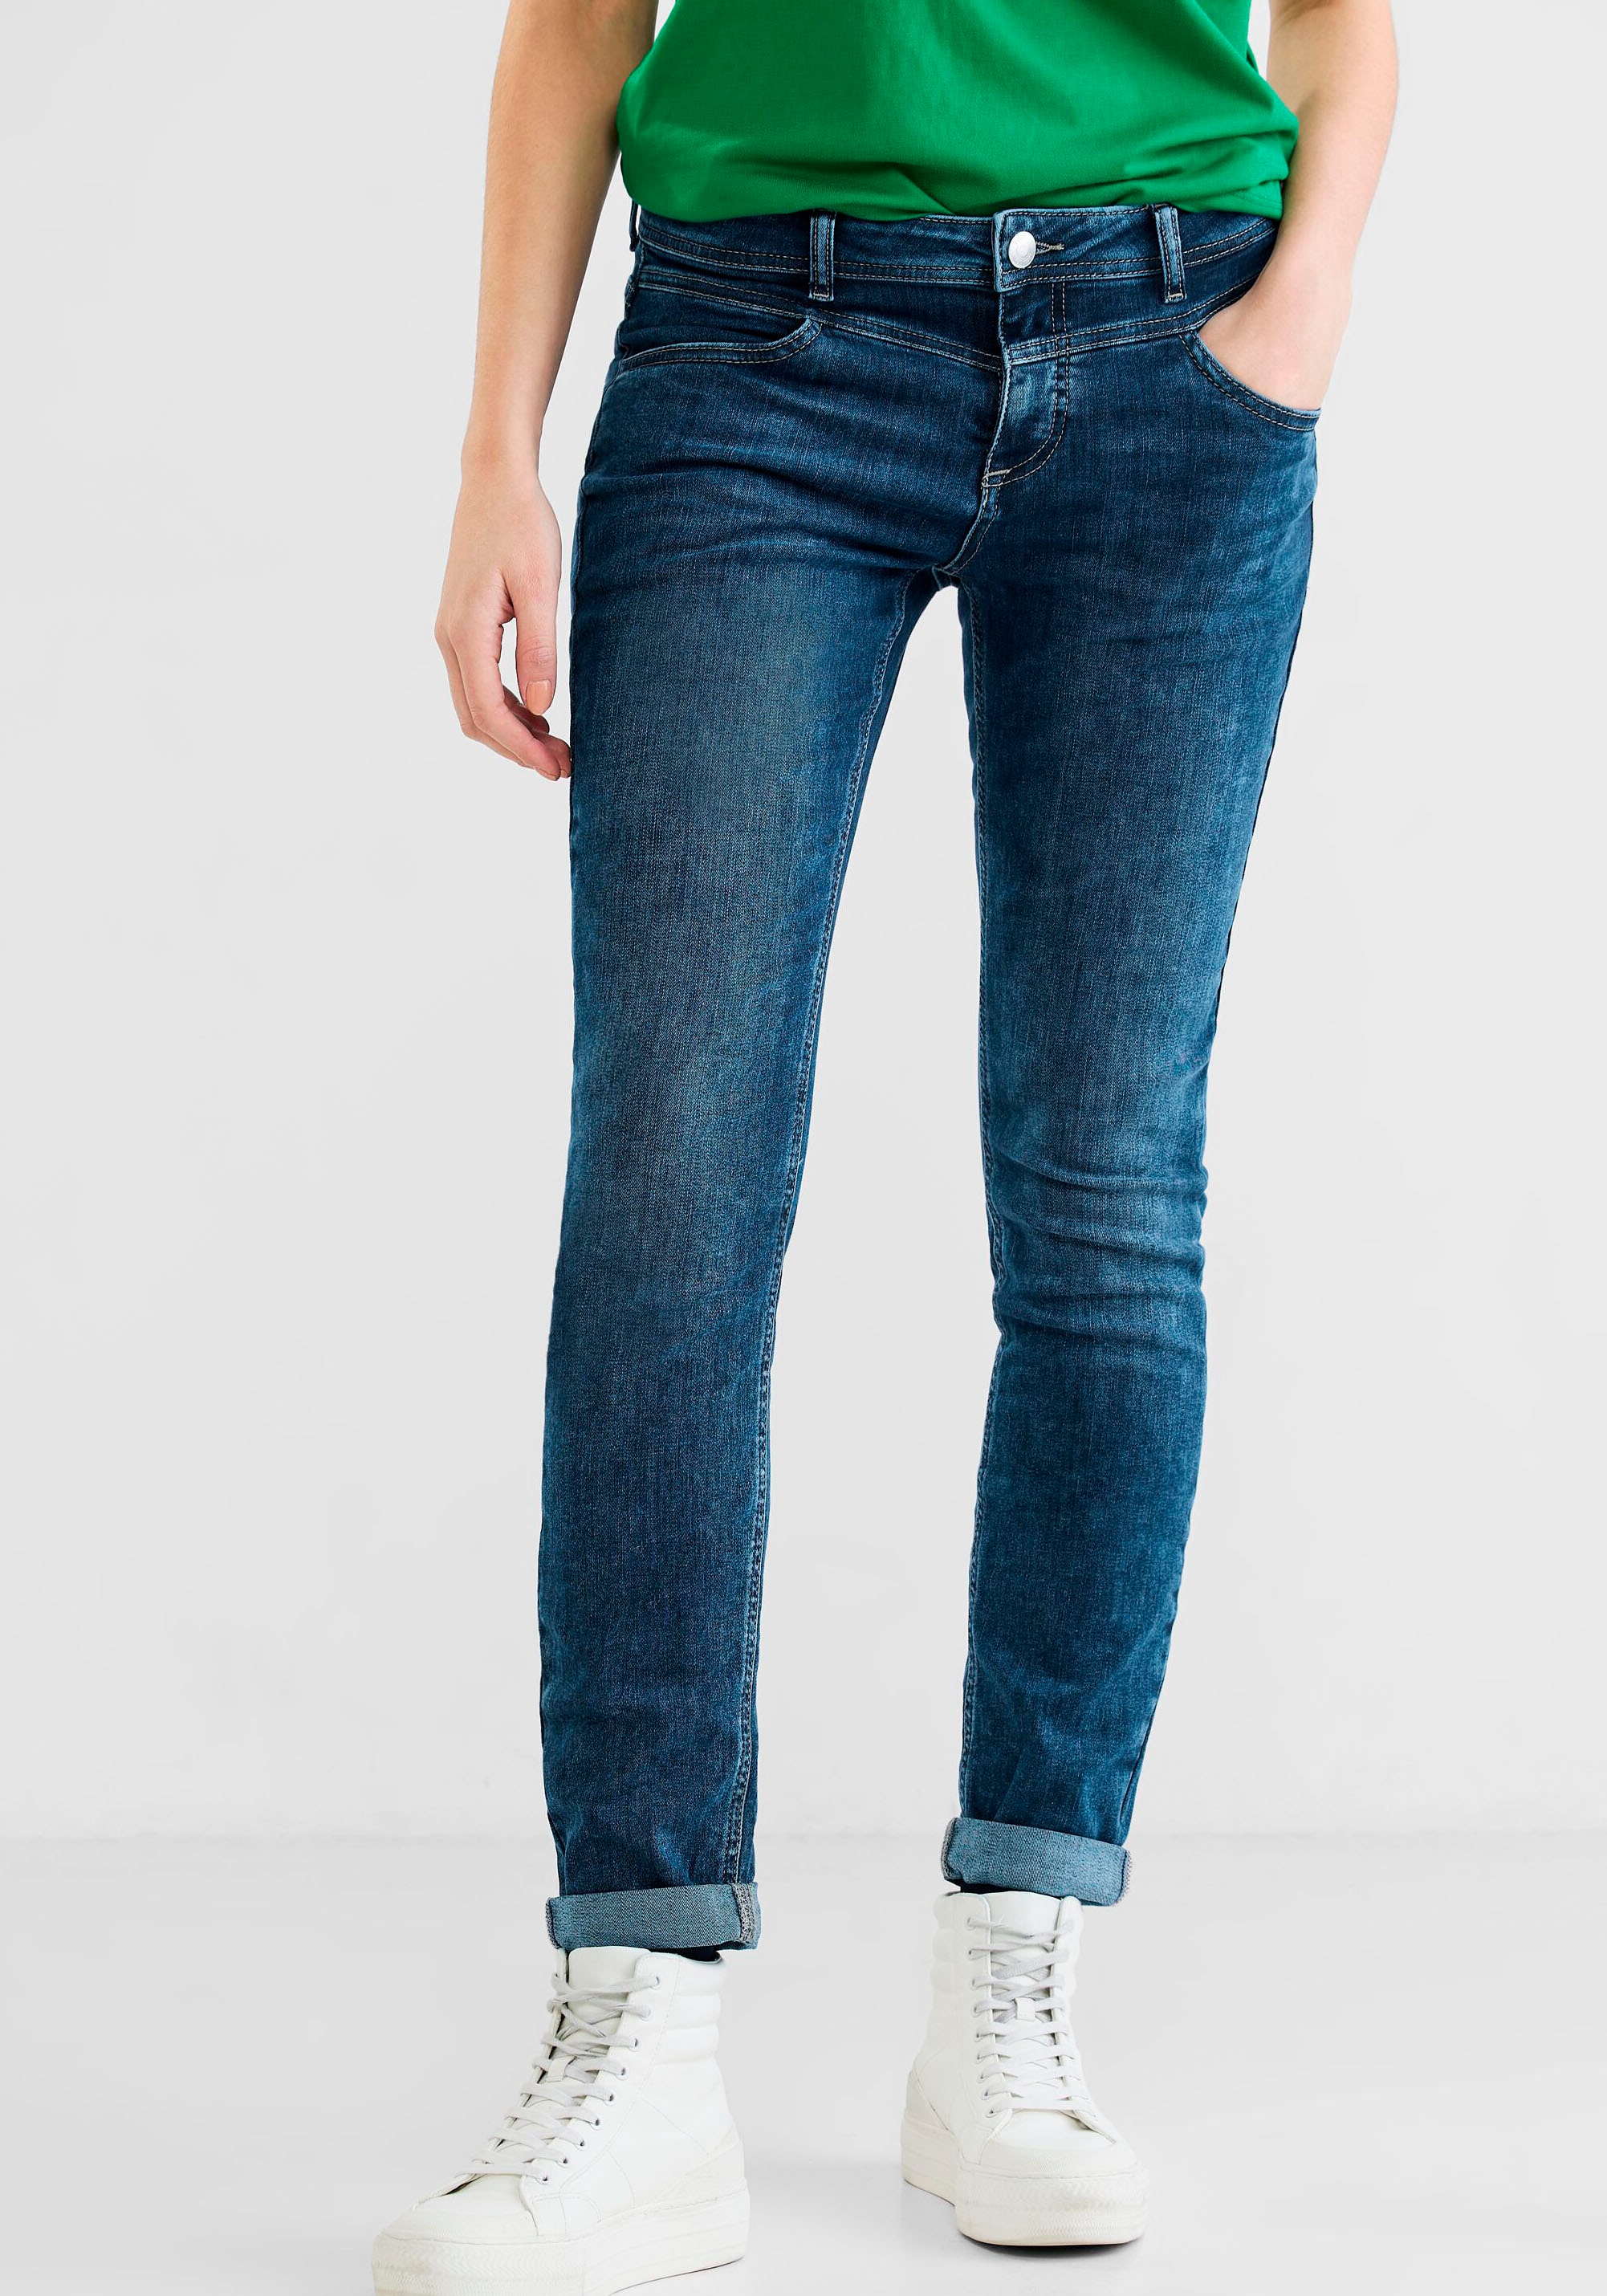 One Street Jeans | Shop Online